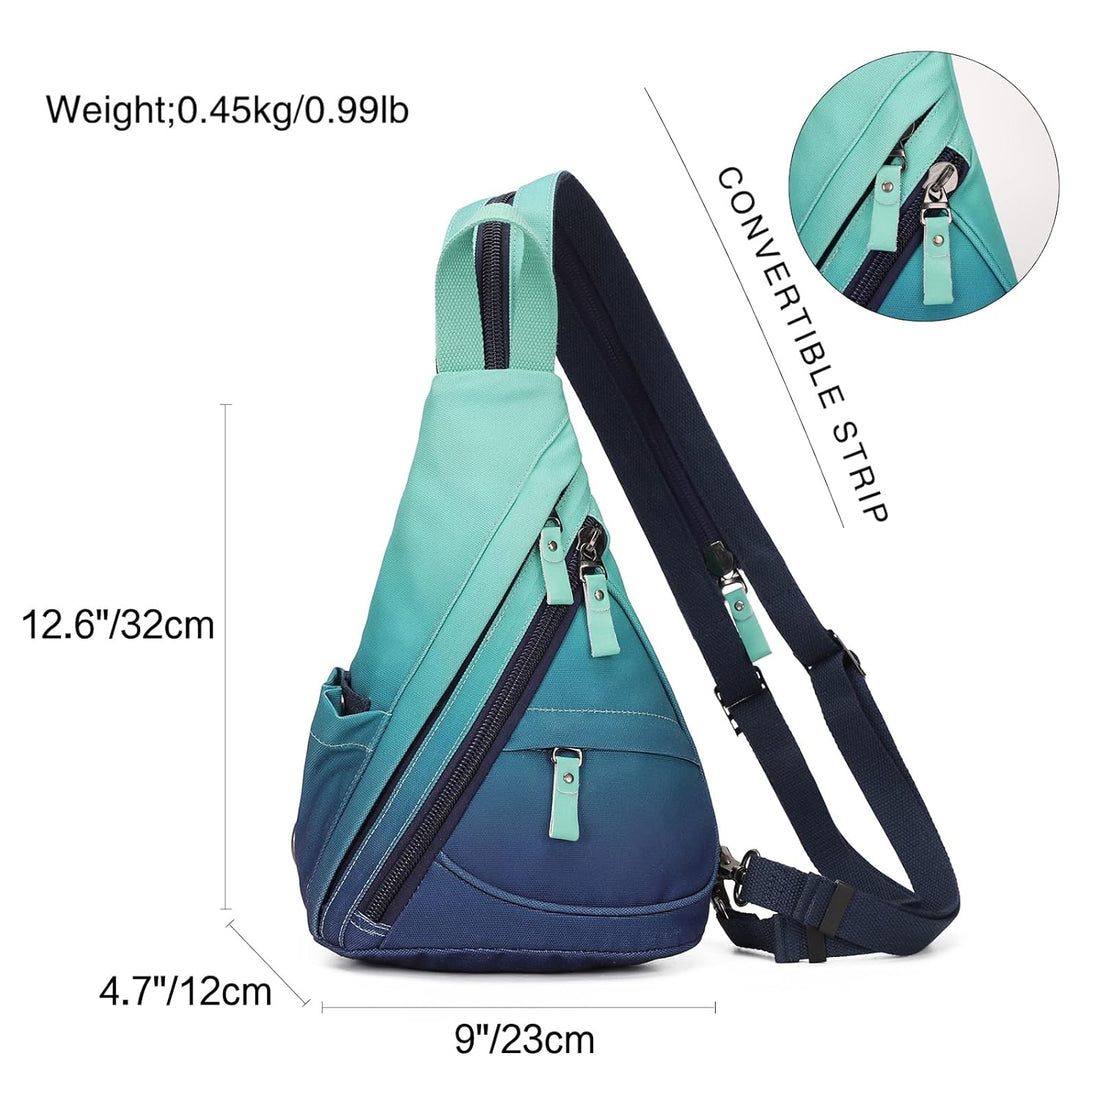 KL928 Sling Bag - Small Crossbody Backpack Shoulder Casual Daypack Rucksack for Men Women, 6881mr-blue+grayishgreen, Medium Size, Sling Bag